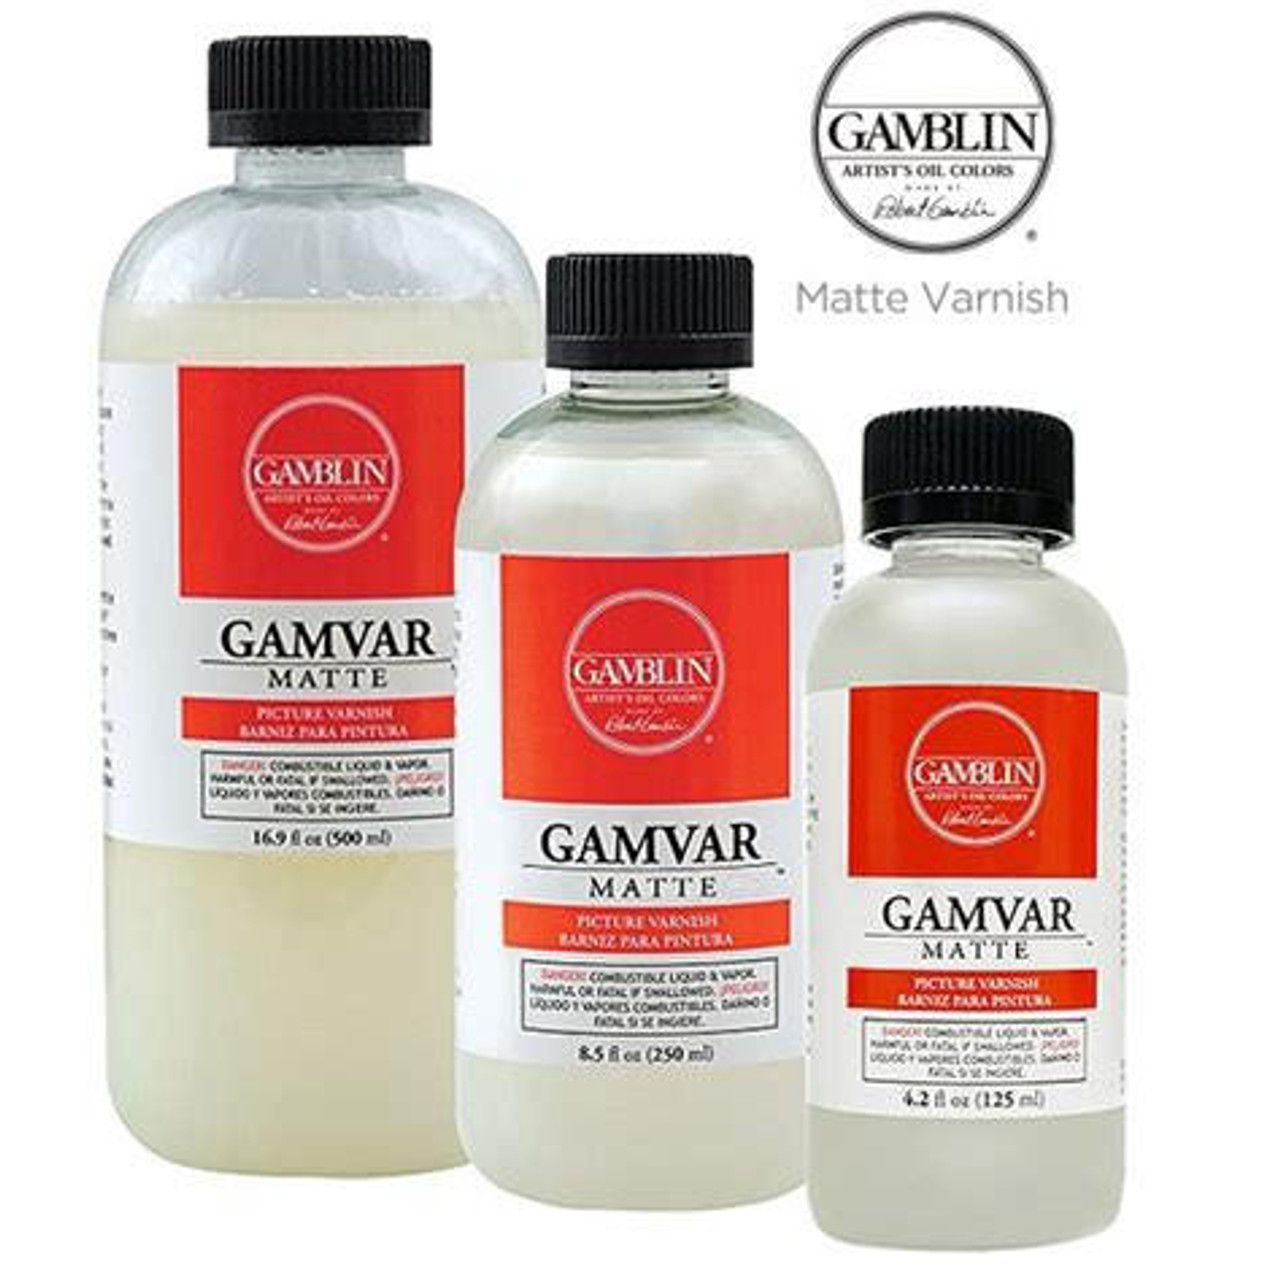 Gamblin Gamvar Picture Varnish, Matte, 8.5 oz. - Sam Flax Atlanta